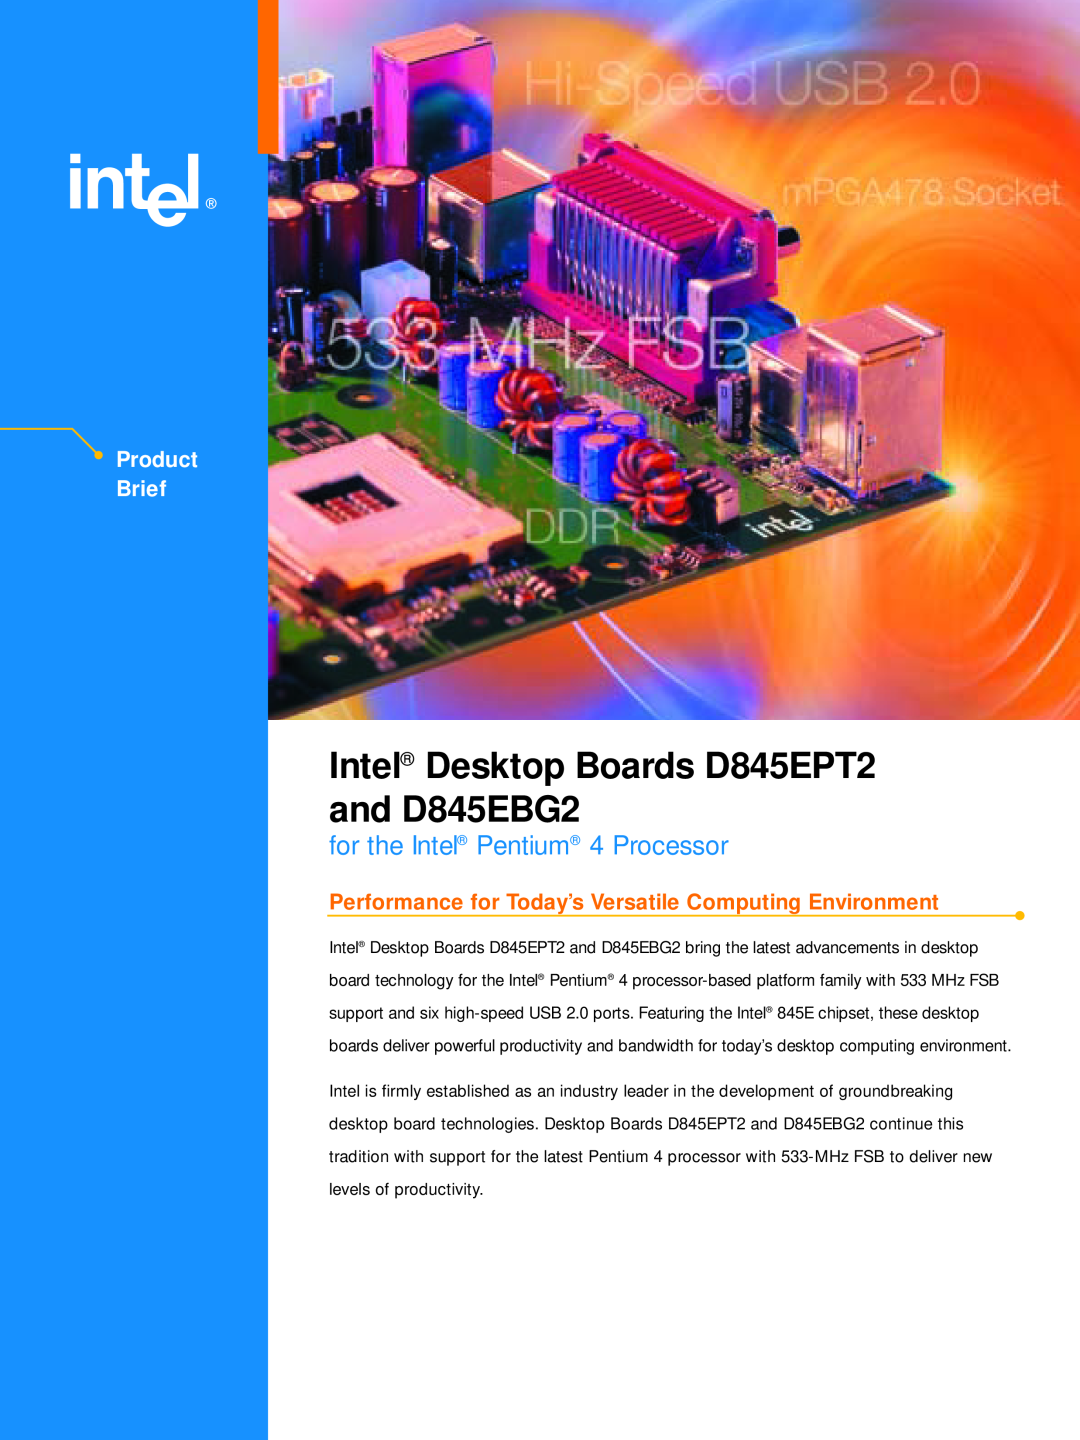 Intel manual Intel Desktop Boards D845EPT2 and D845EBG2, for the Intel Pentium 4 Processor, Product Brief 